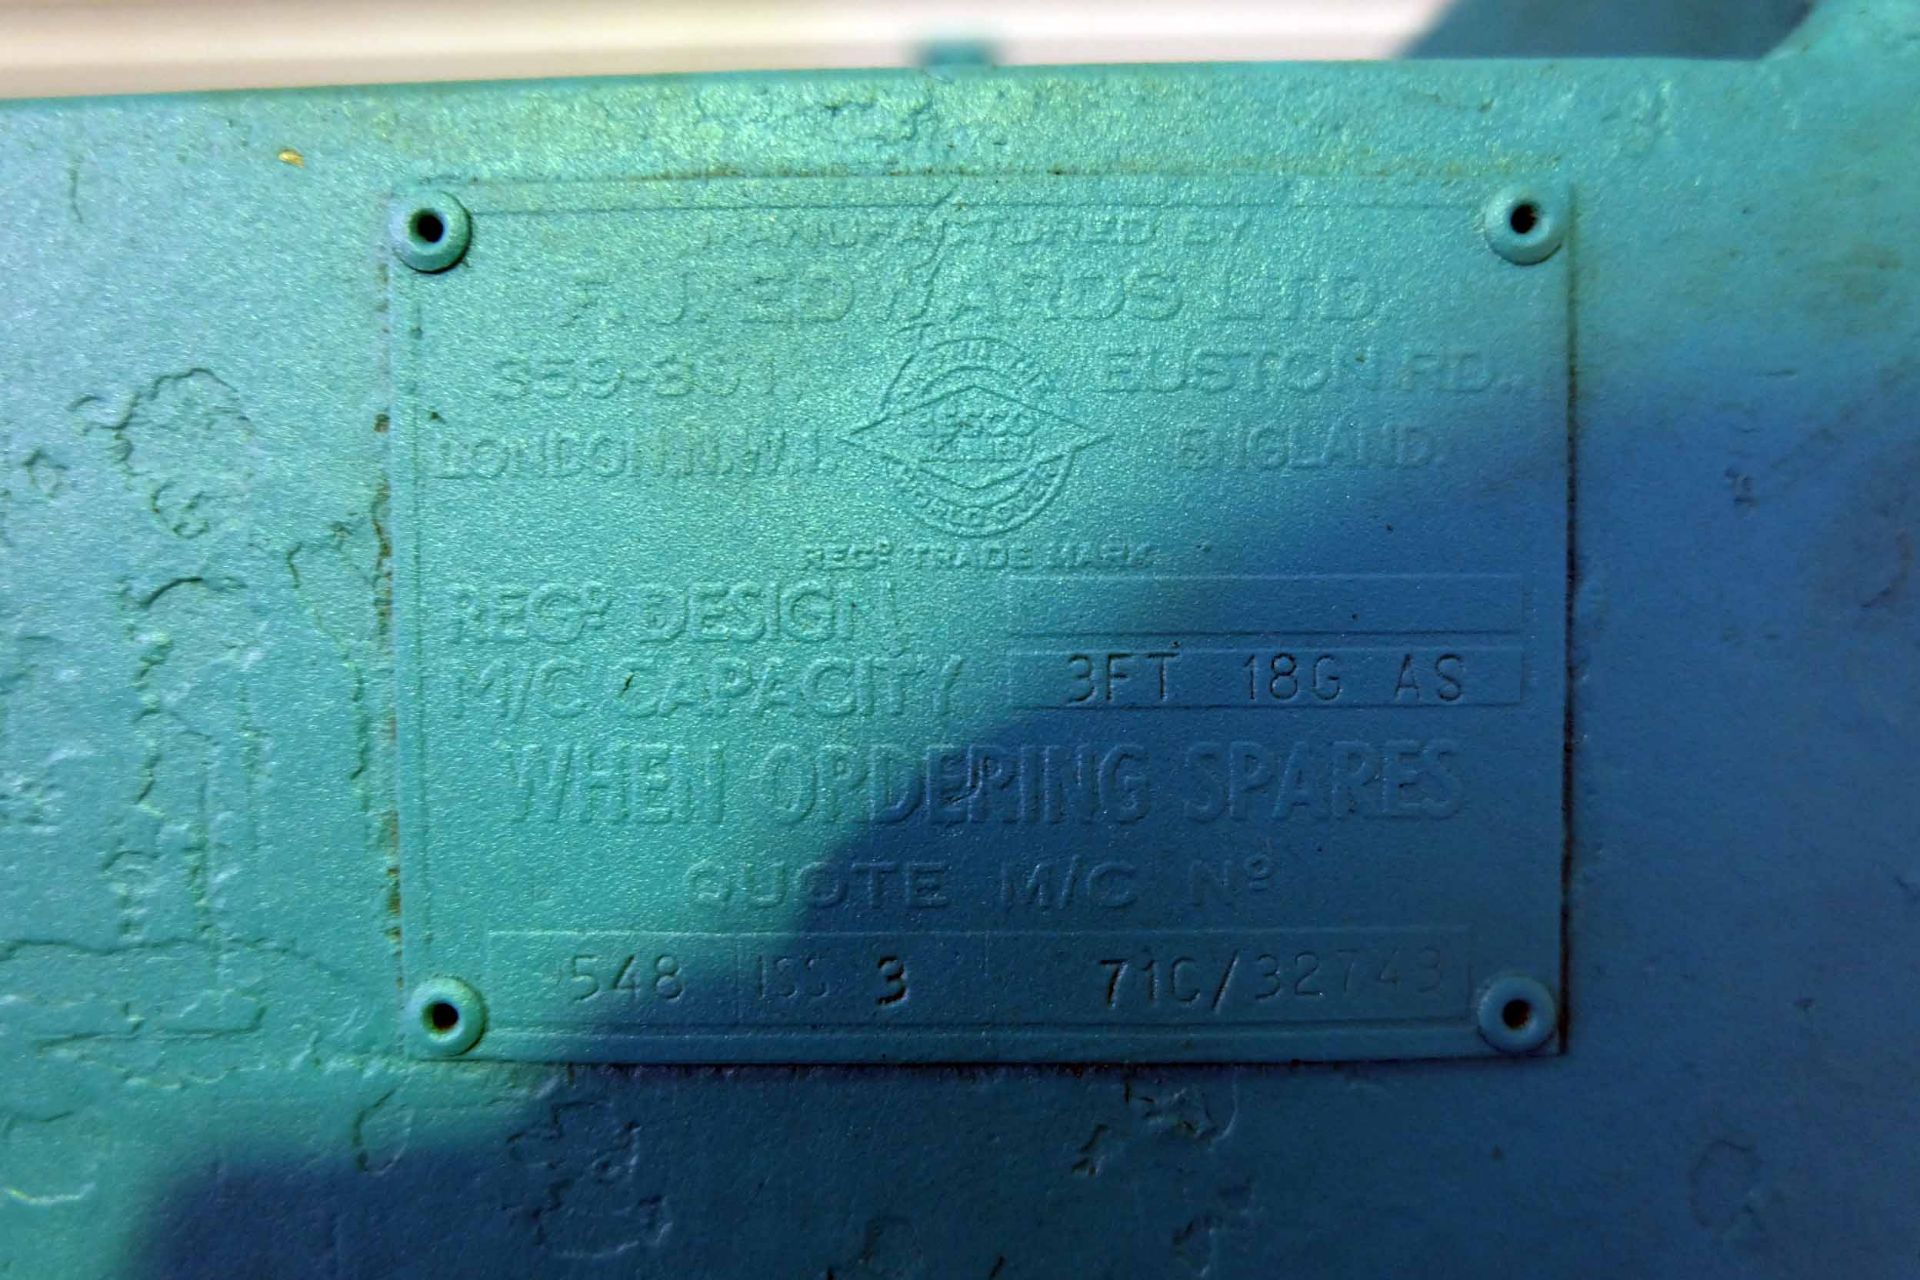 Edwards Besco Model 71C Sheet Metal Folding Machine. Capacity 3ft x 18G AS. - Image 8 of 8